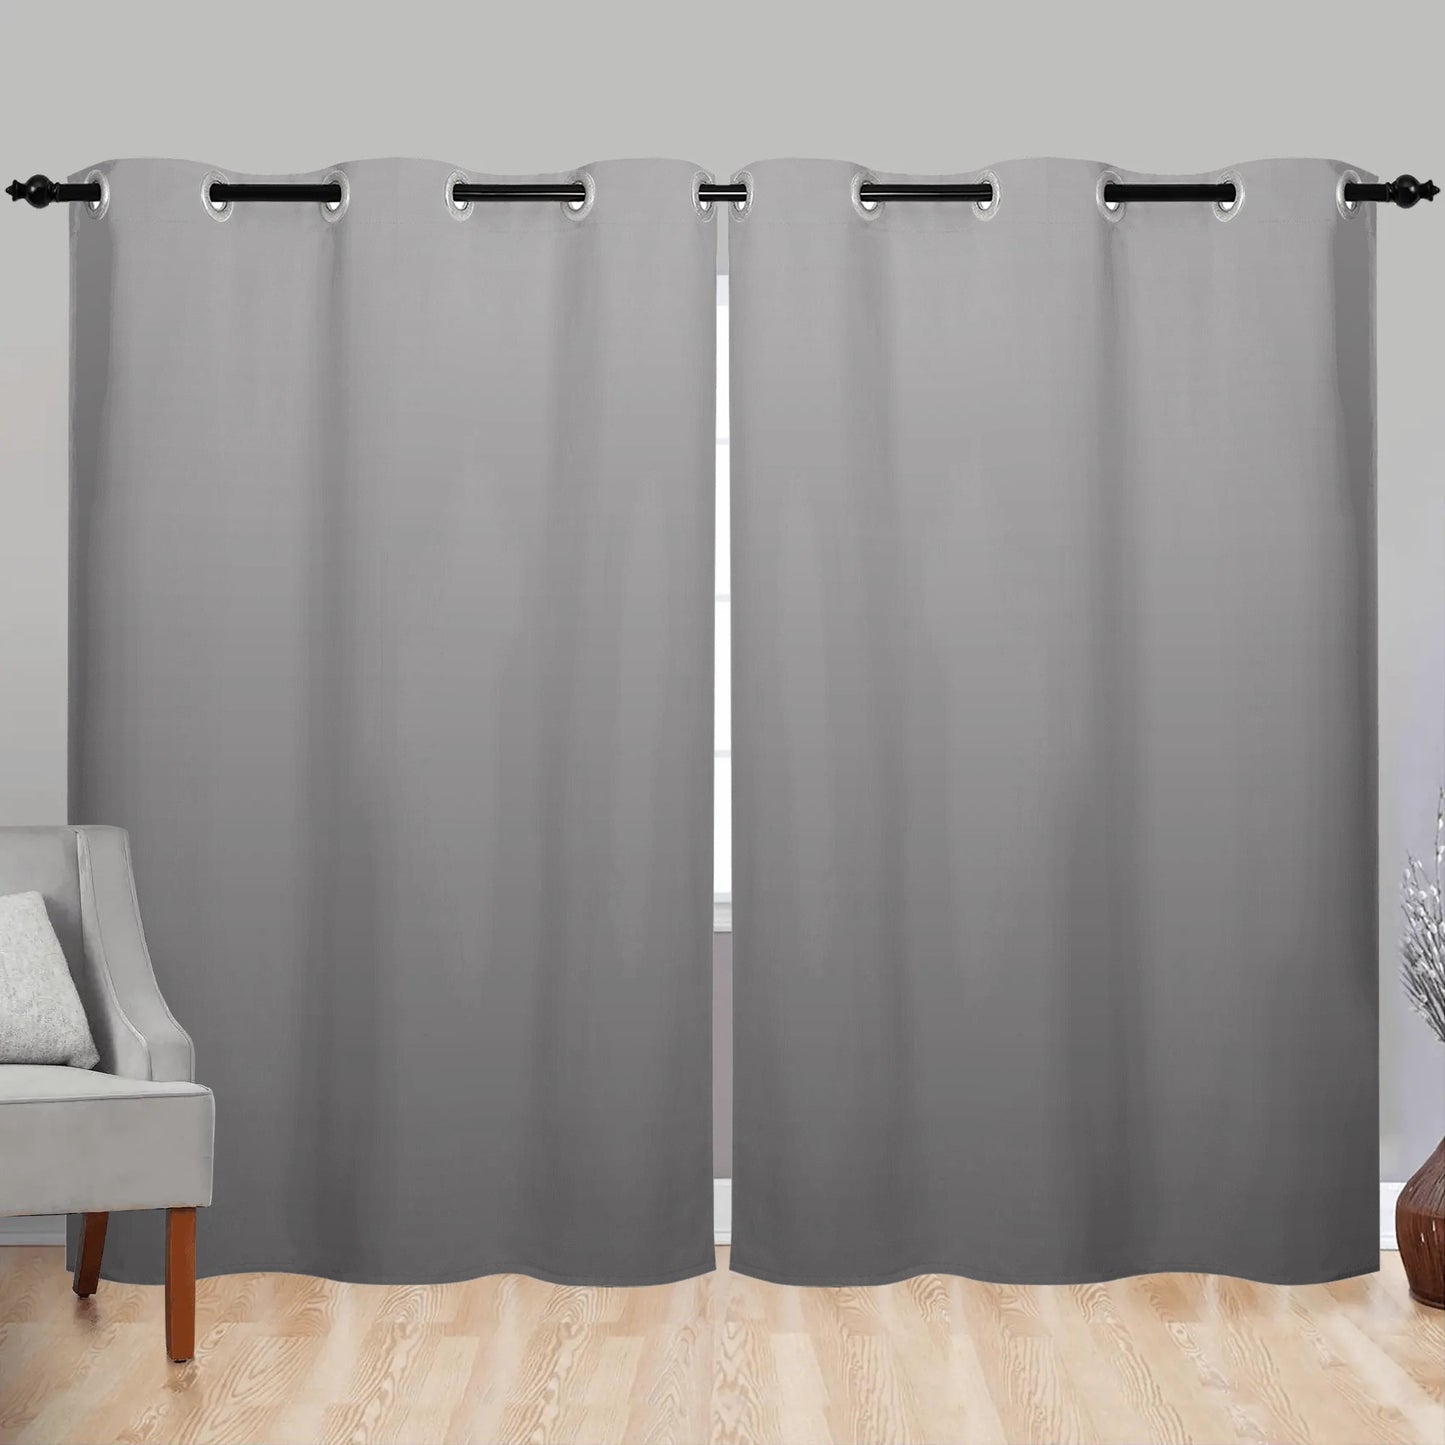 Window Curtains (2 PCS)...Gradient Gray